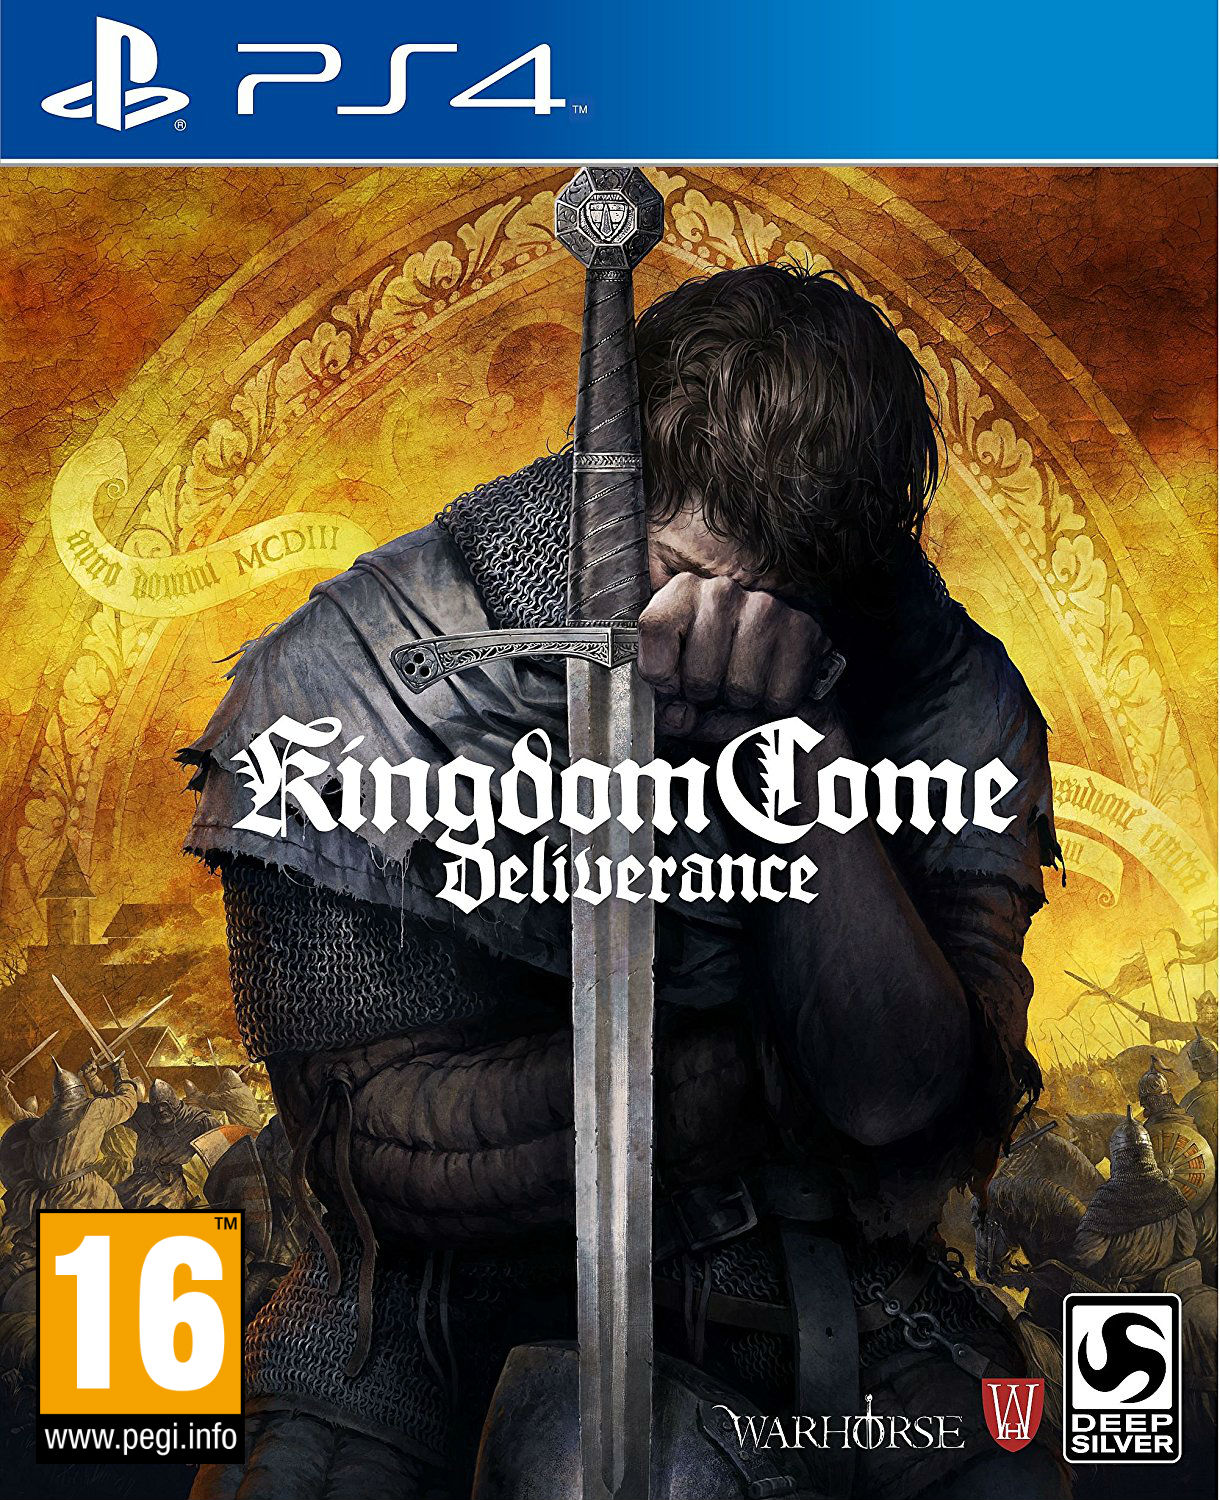 Kingdom Come: Deliverance Special Edition